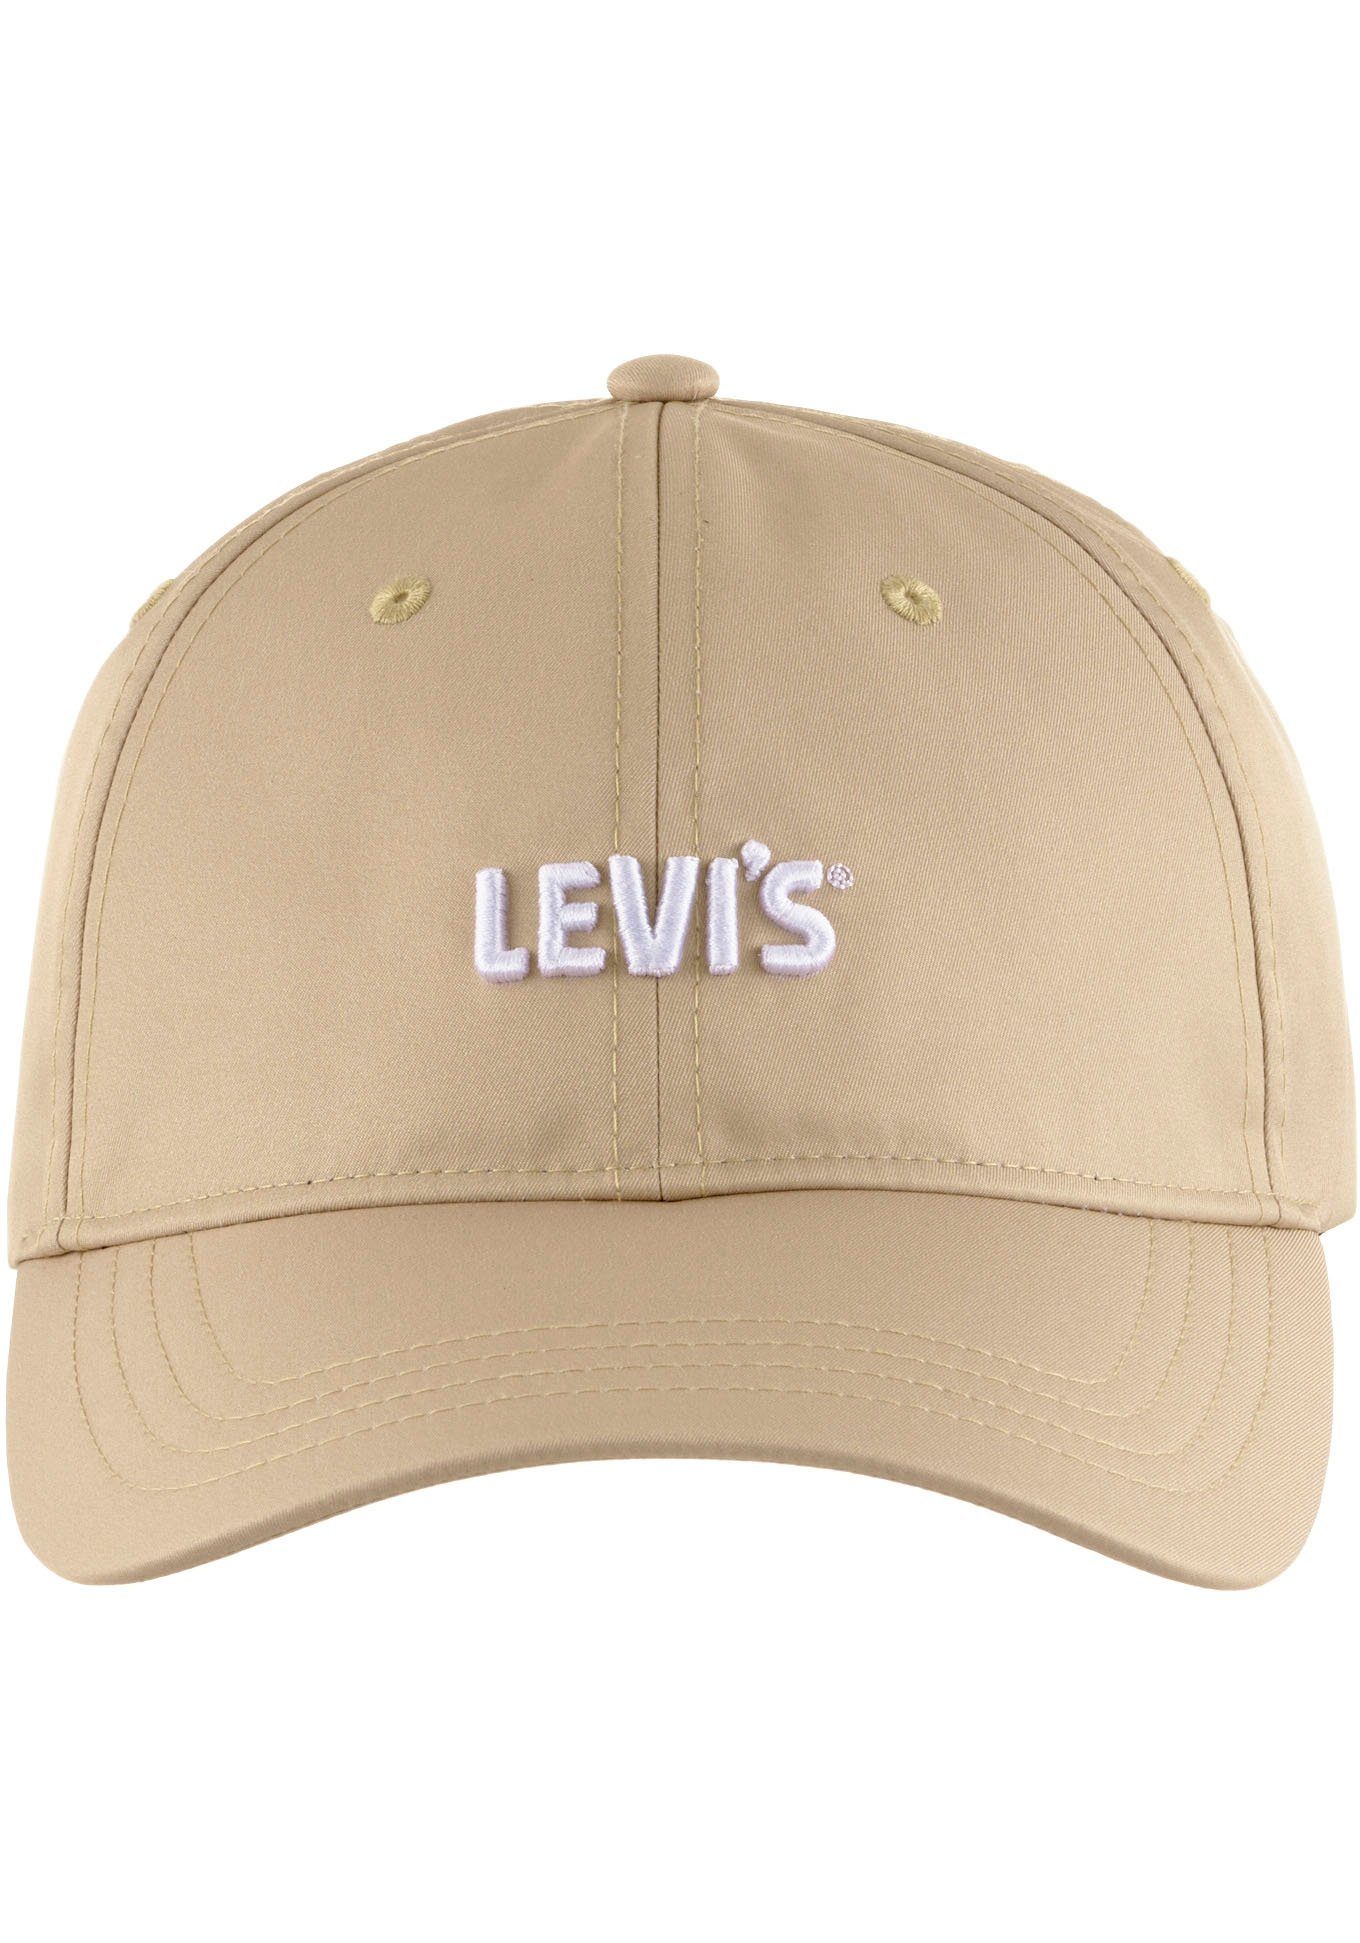 Levi's® Baseball Cap natural Gold tan Tab